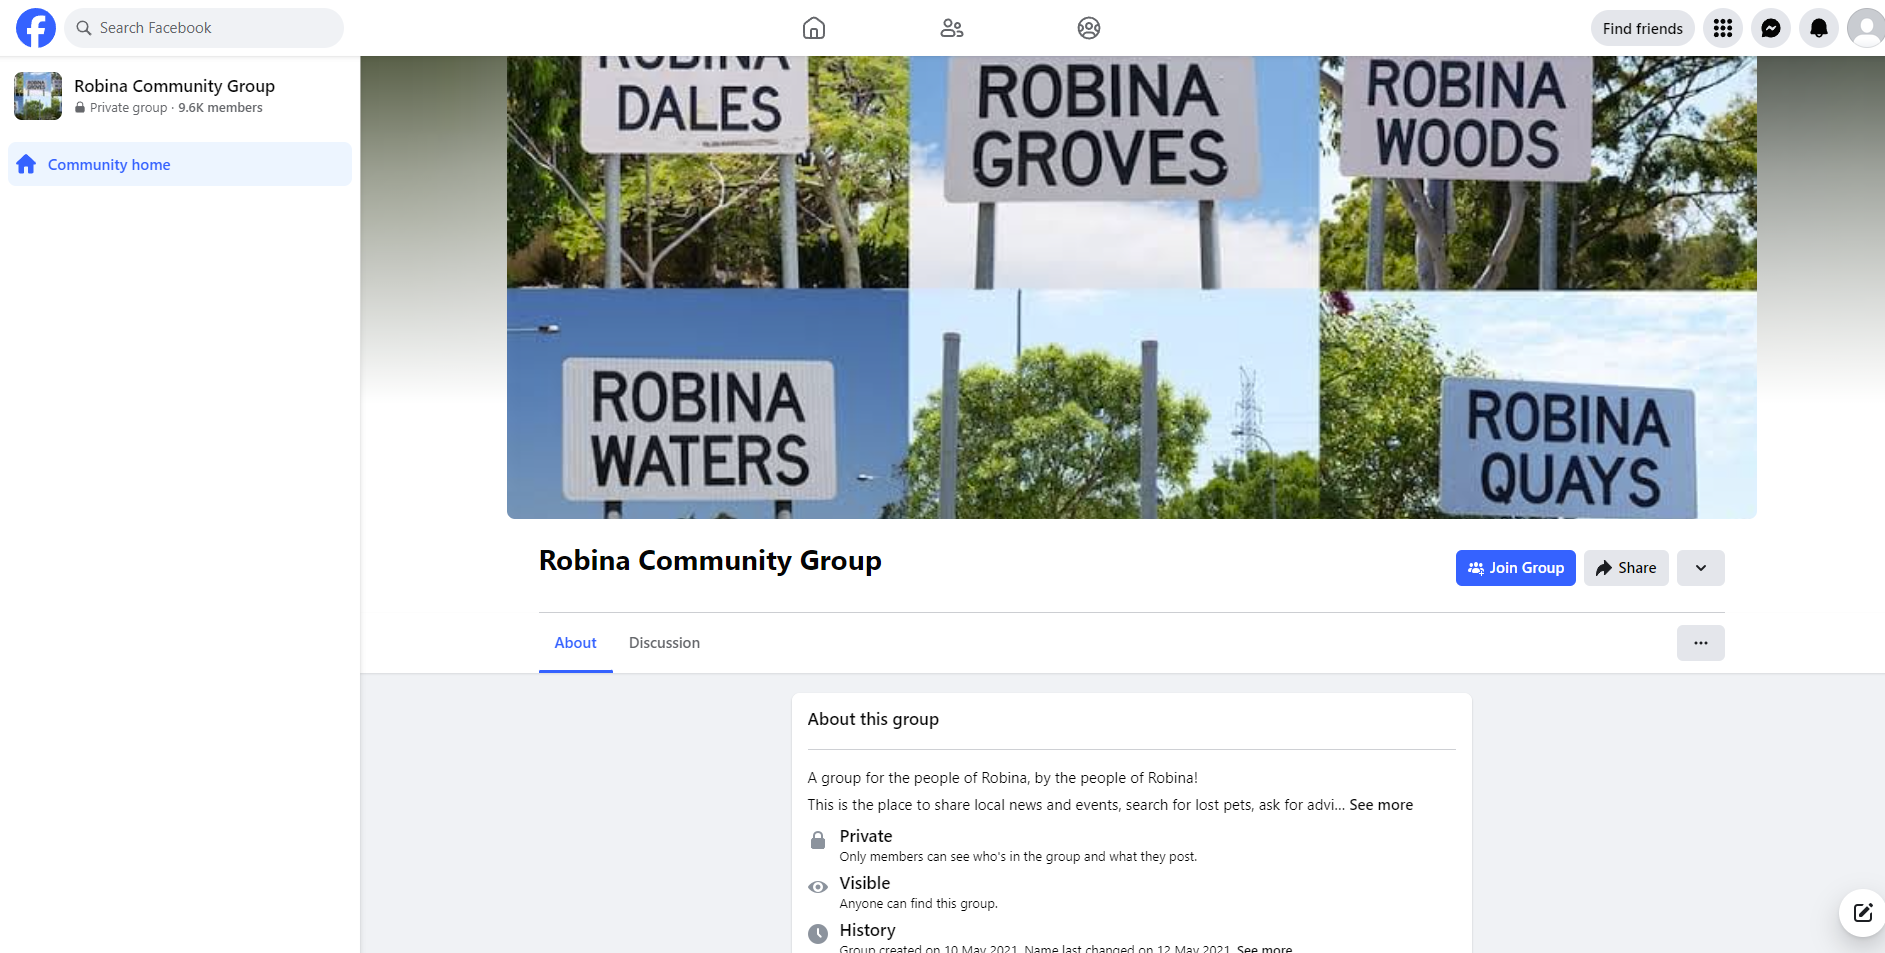 Robina Community Group